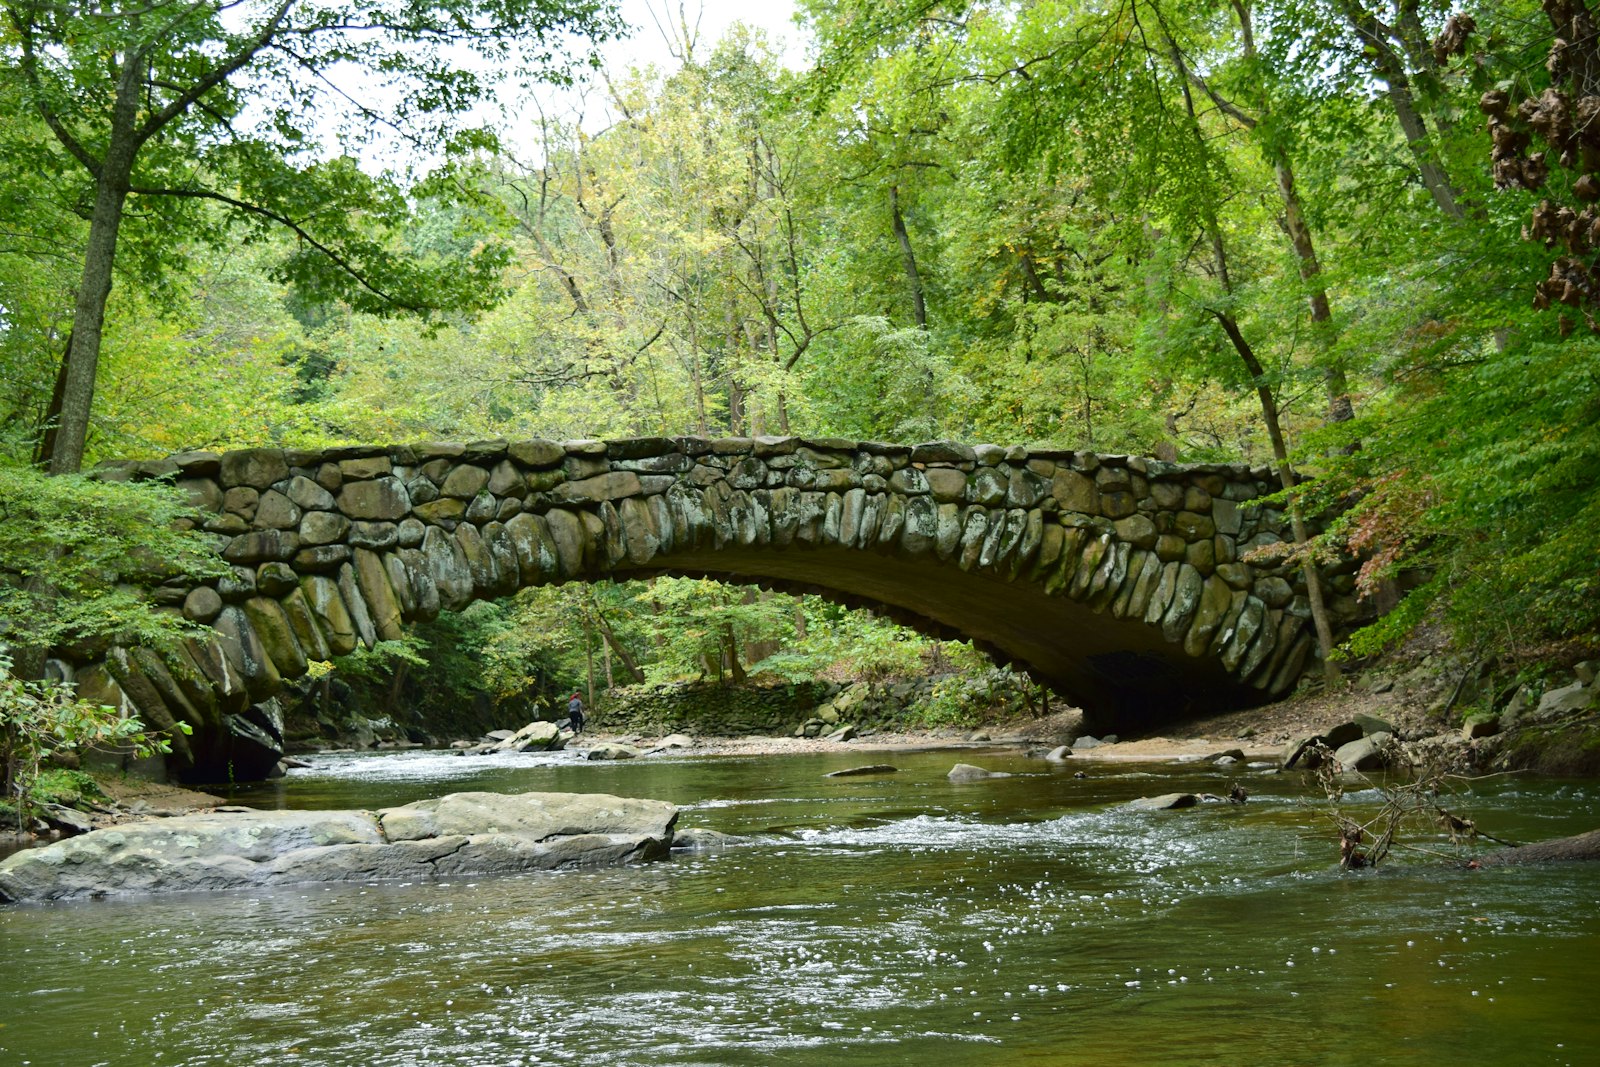 A stone bridge stretches over a calm creek